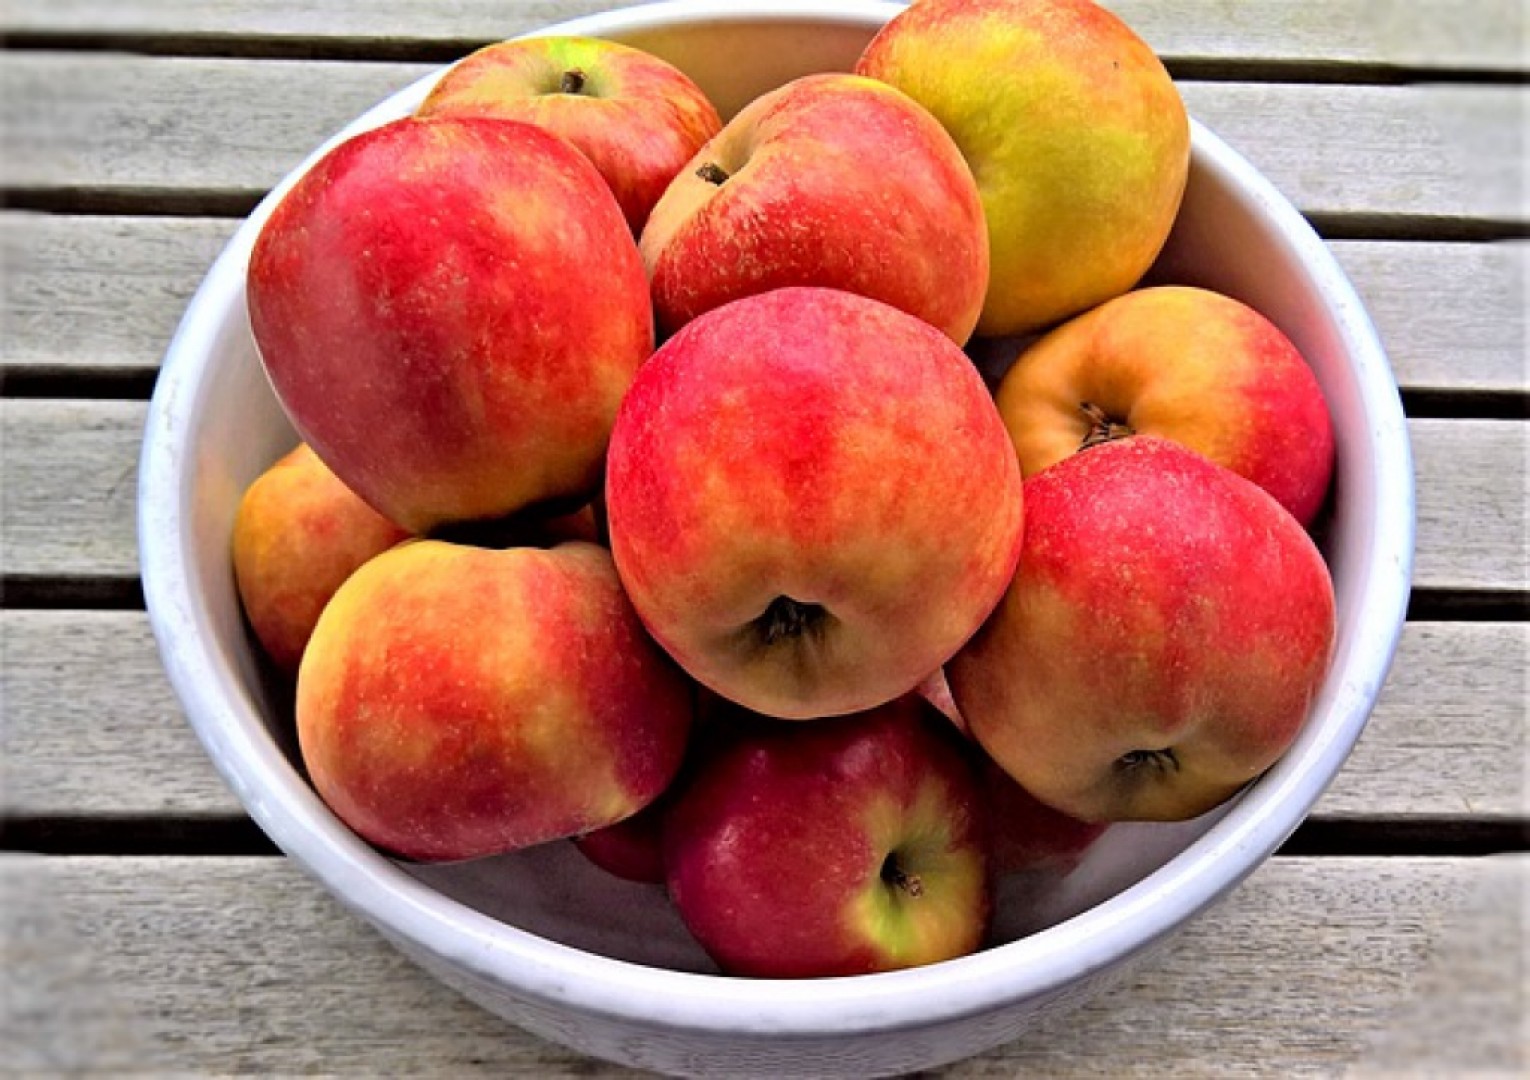 10 účinkov jablka na vaše zdravie 